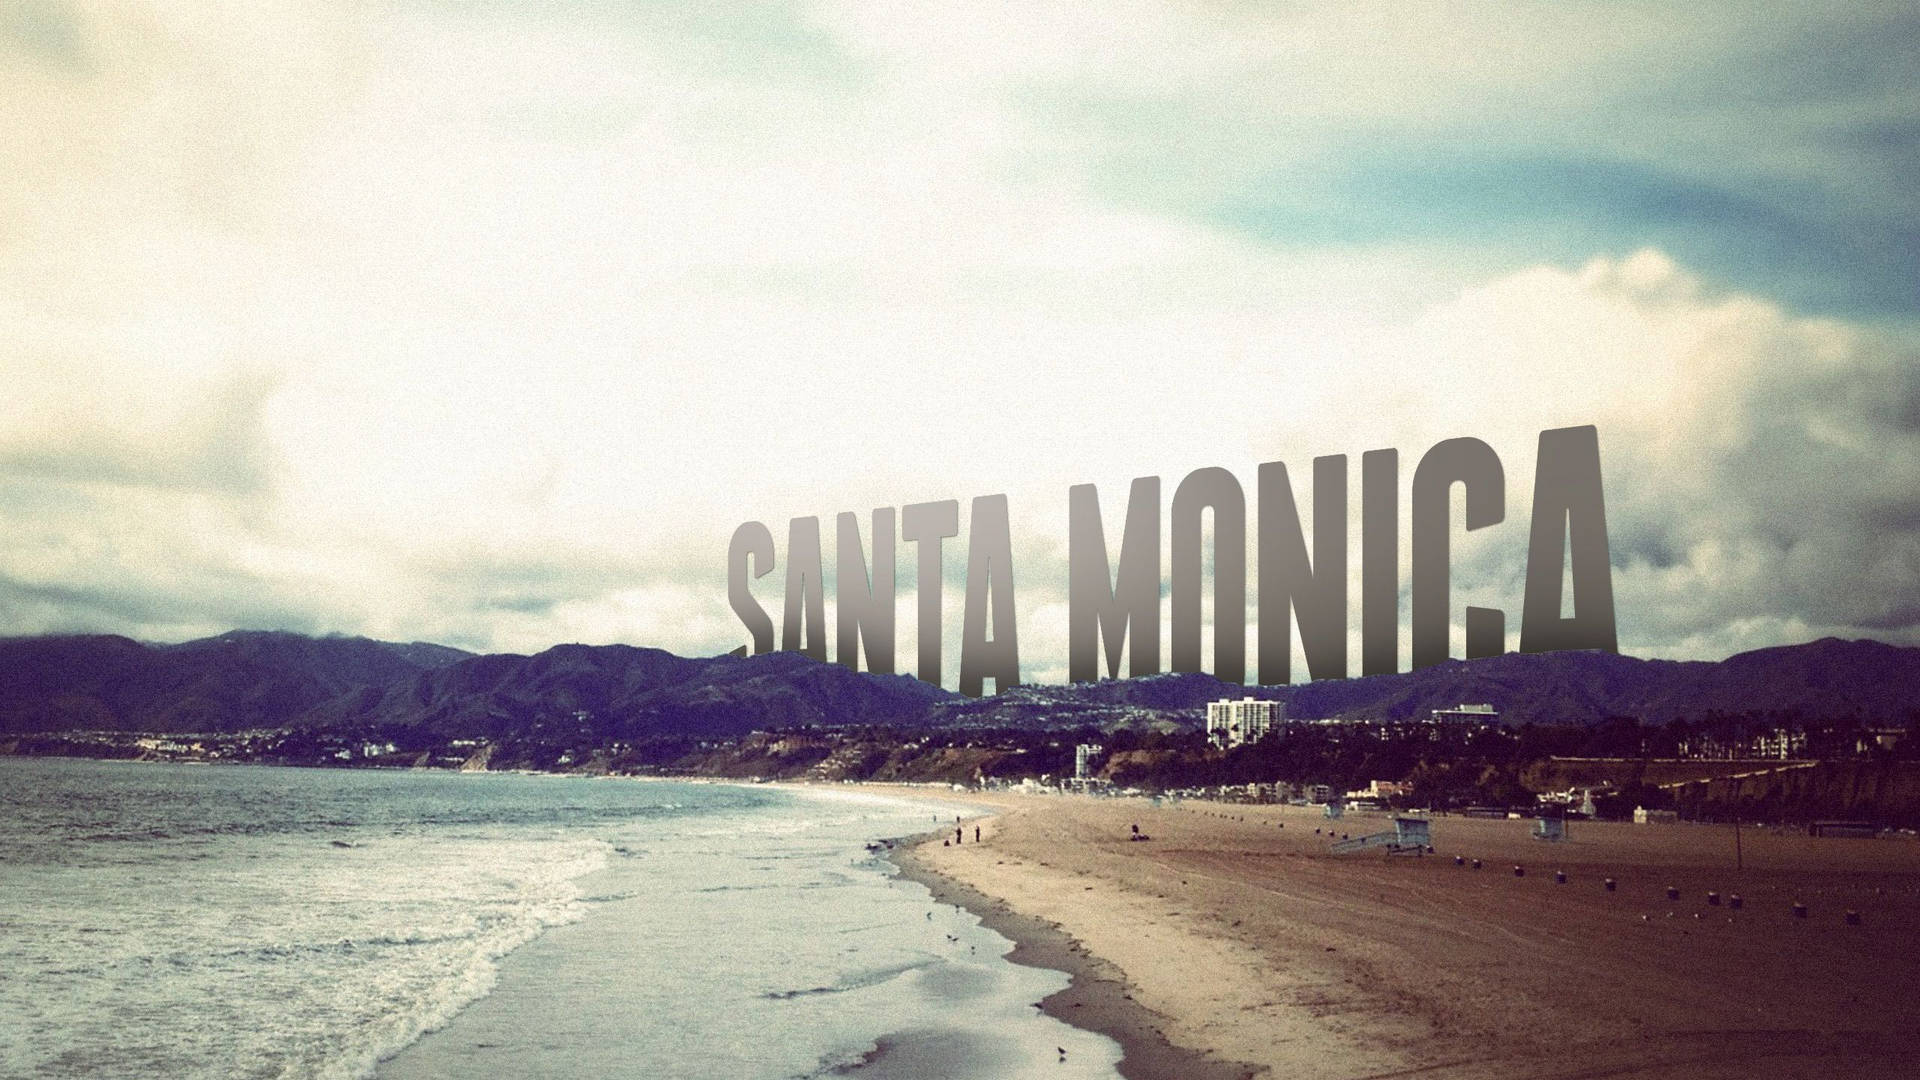 Santa Monica Text Mountain